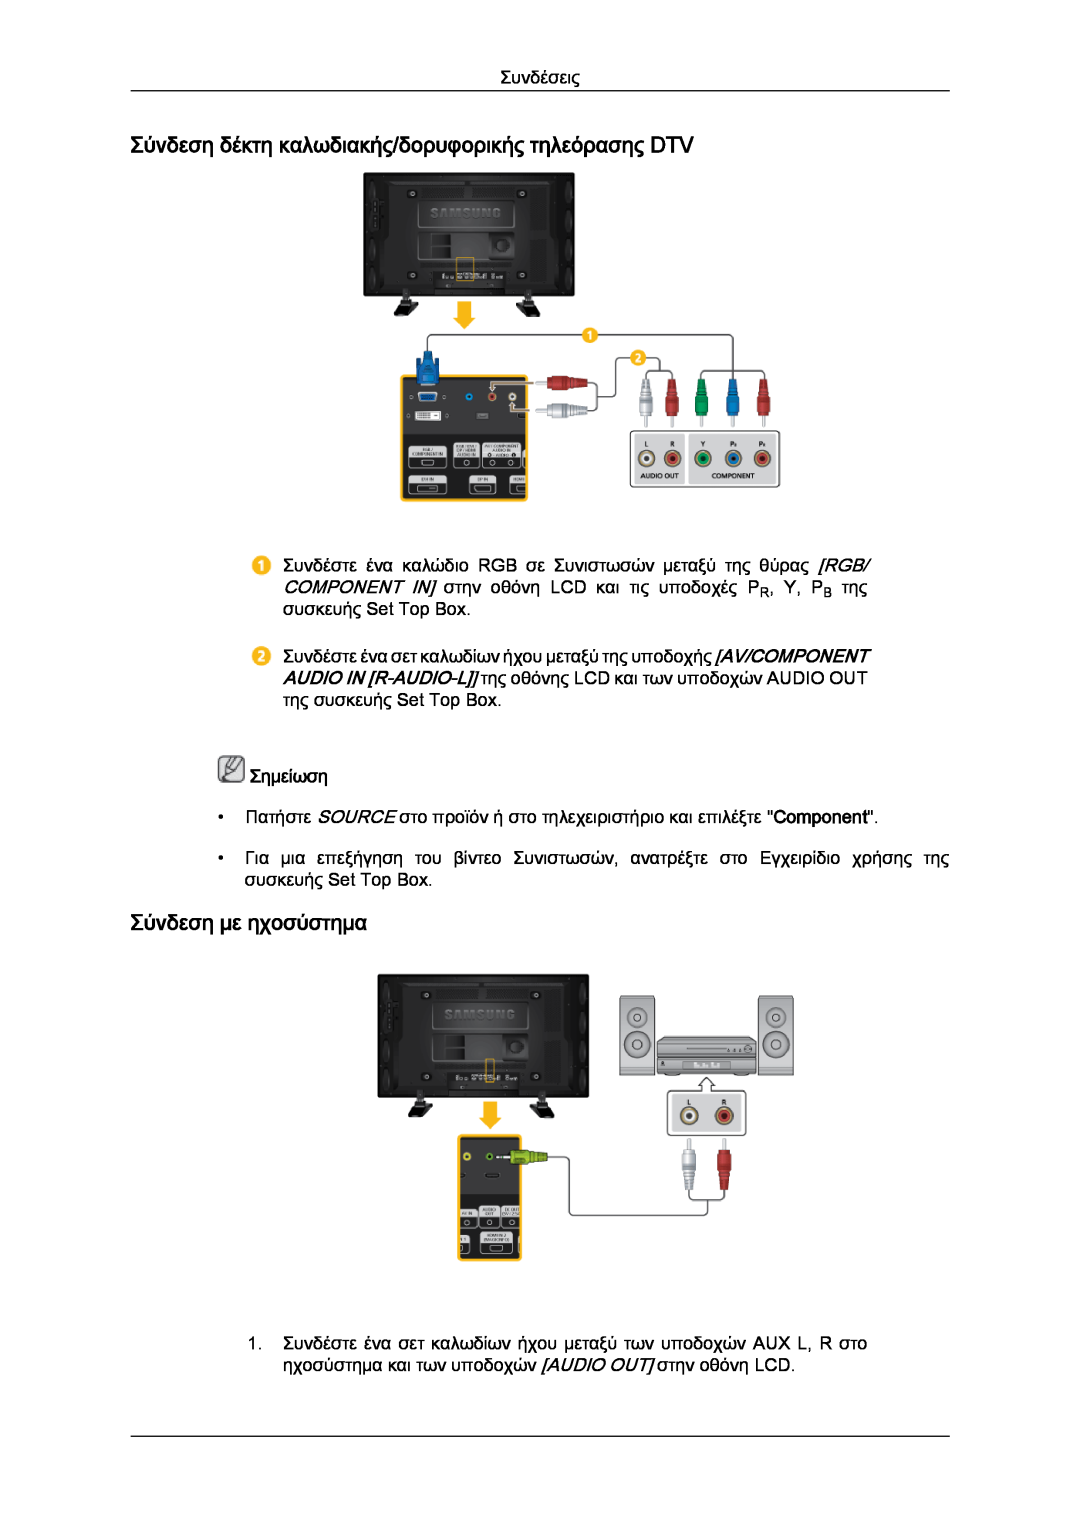 Samsung LH46GWSLBC/EN, LH40GWTLBC/EN Σύνδεση δέκτη καλωδιακής/δορυφορικής τηλεόρασης DTV, Σύνδεση με ηχοσύστημα, Σημείωση 